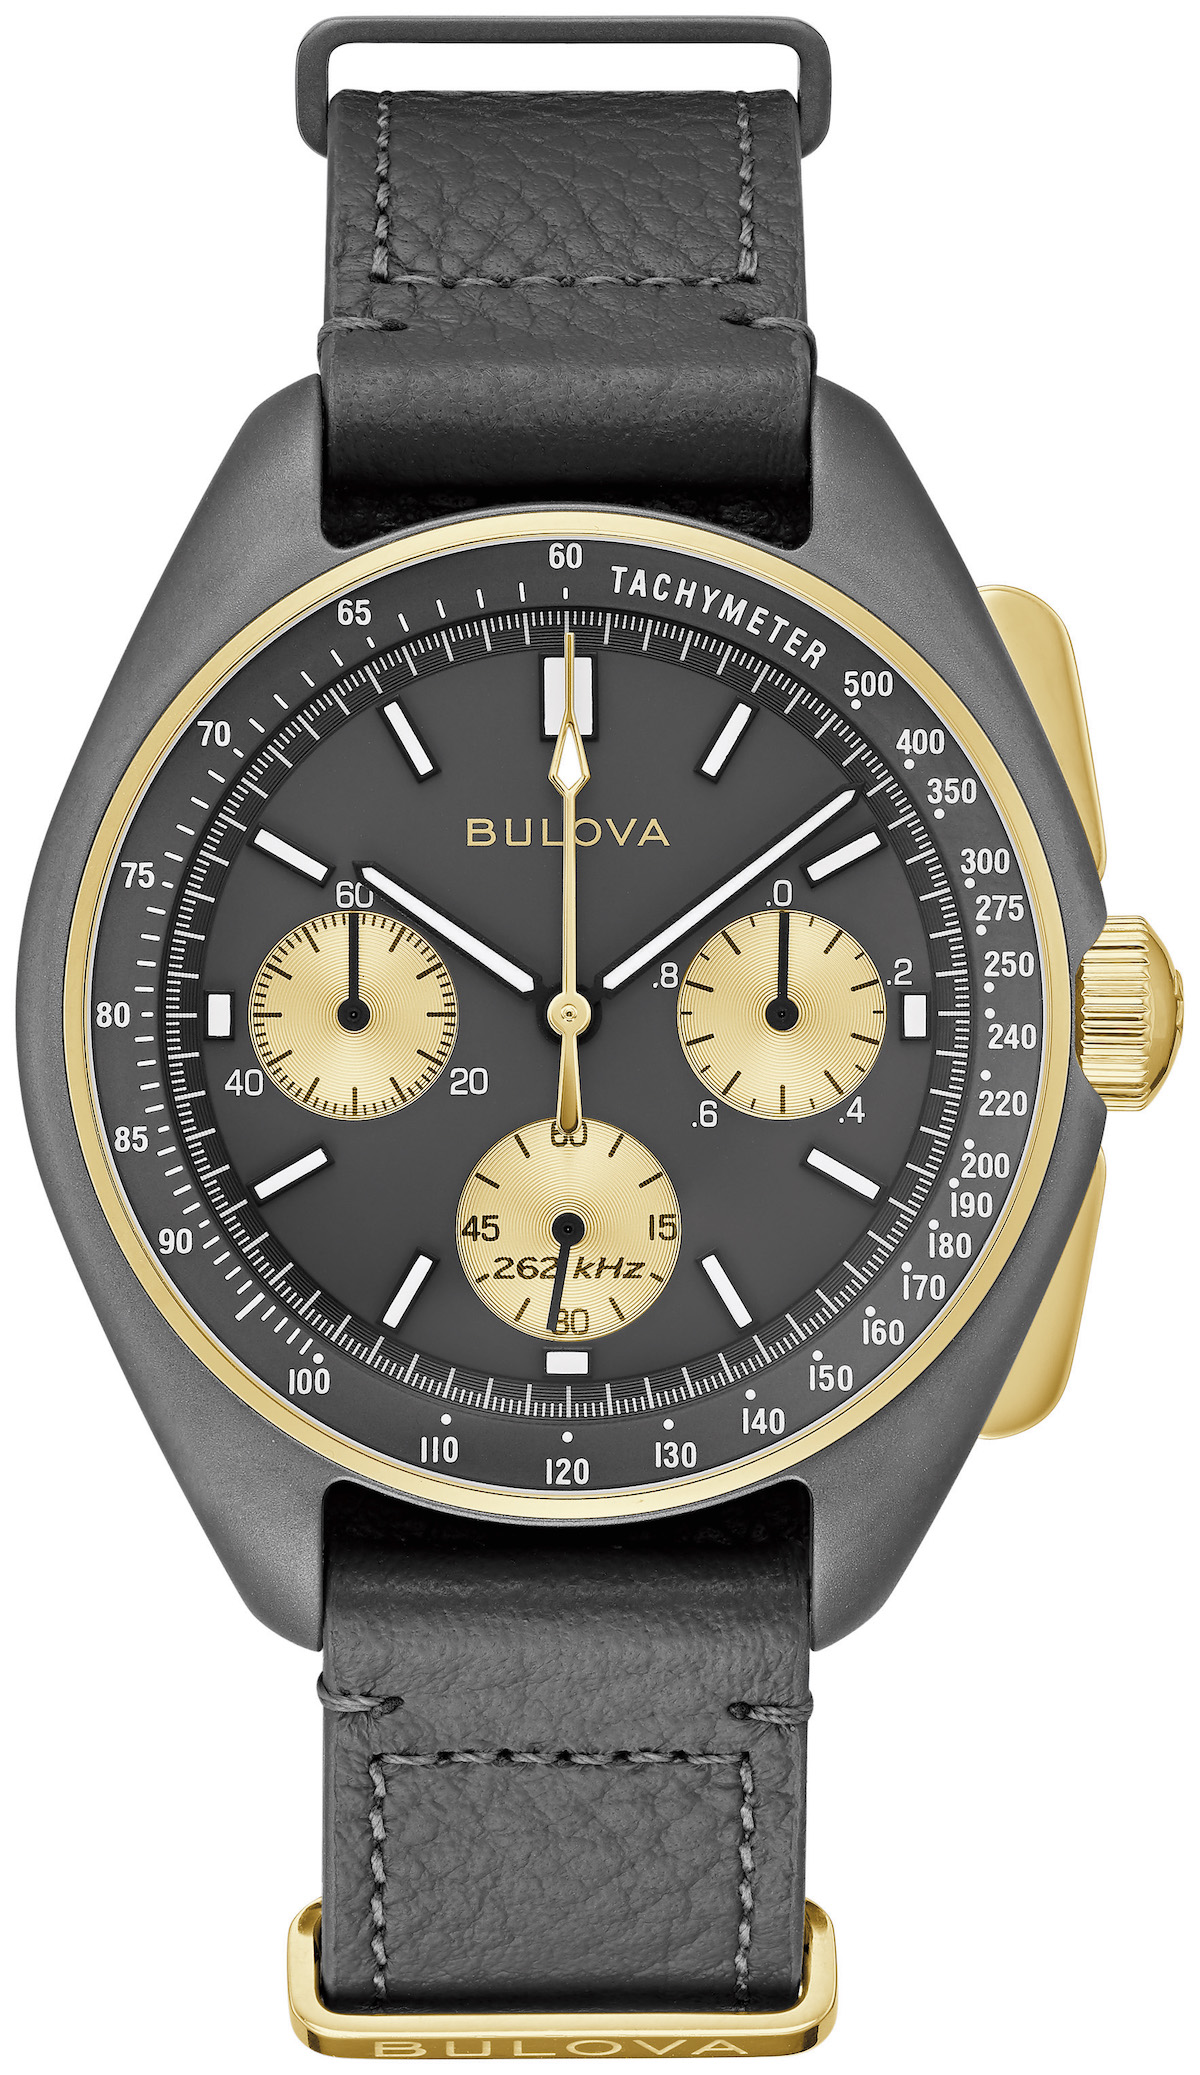 Bulova unveils a 50th Anniversary Limited Edition Lunar Pilot watch, 